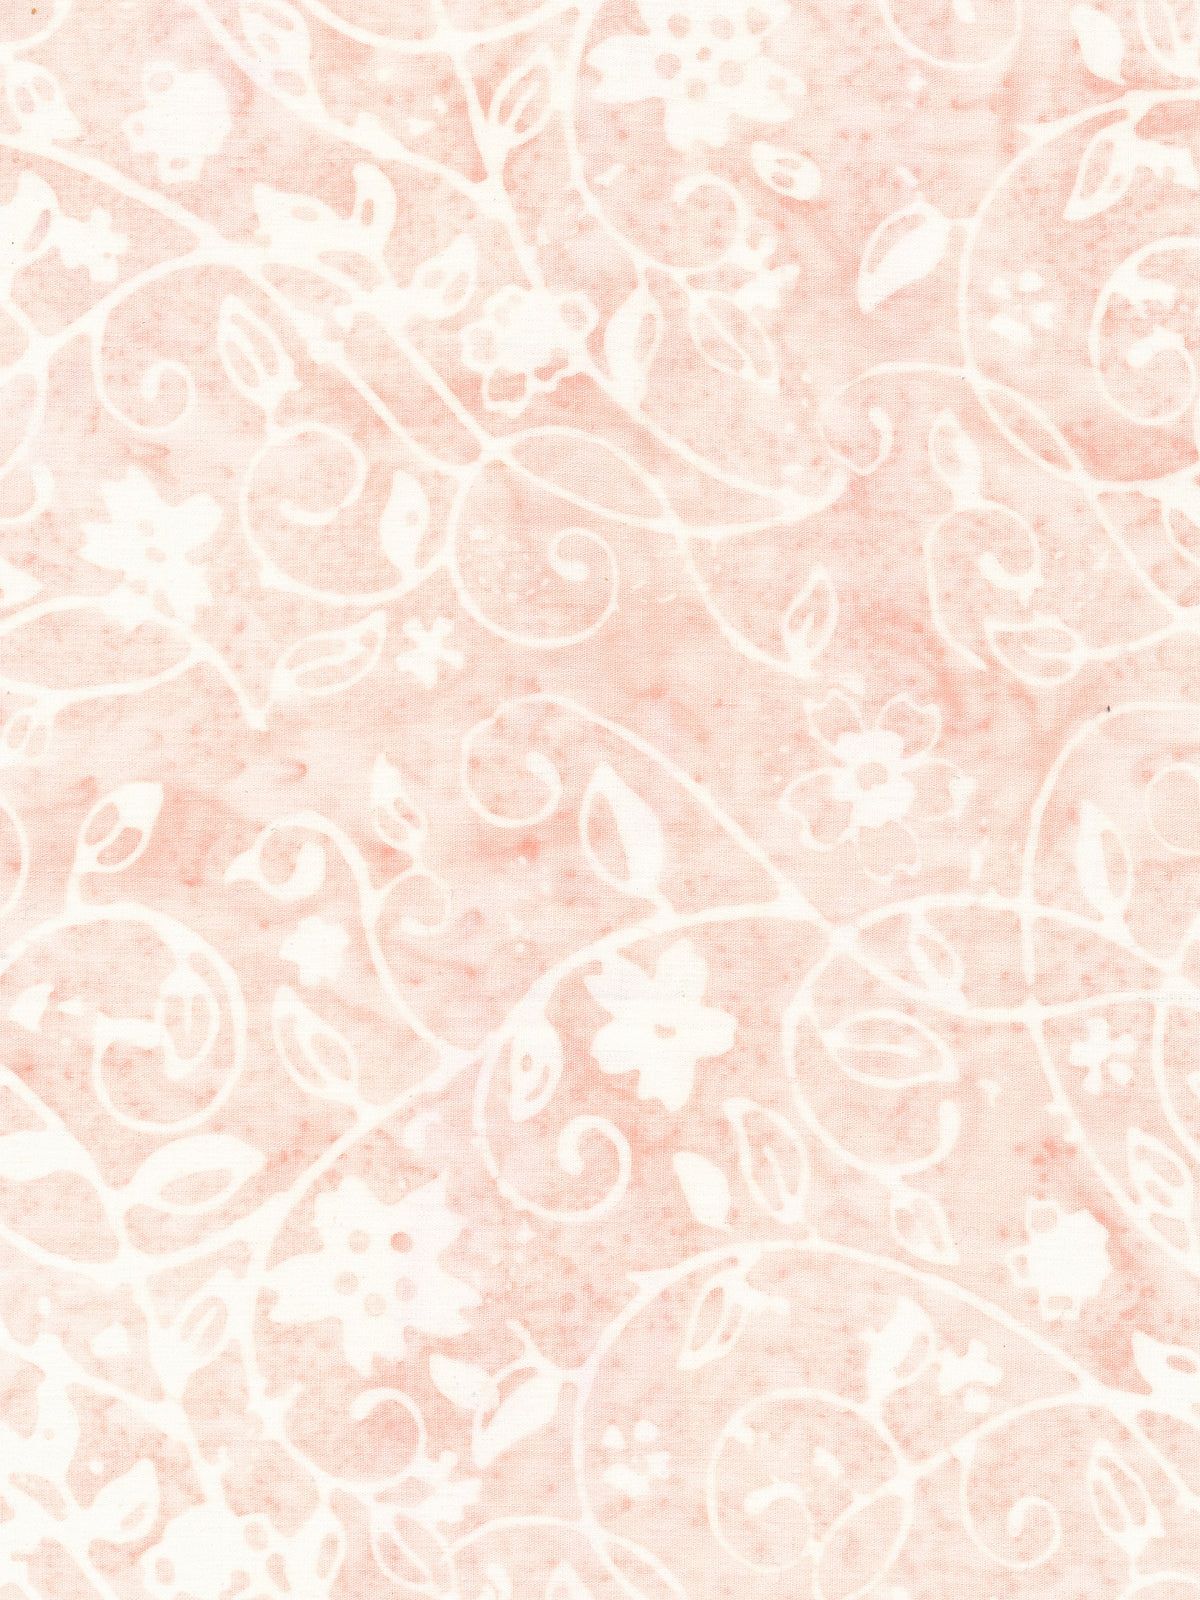 Majestic Batiks Quilt Fabric - Strawberry Lemonade Flowers in Light Pink - Strawberry Lemonade-600